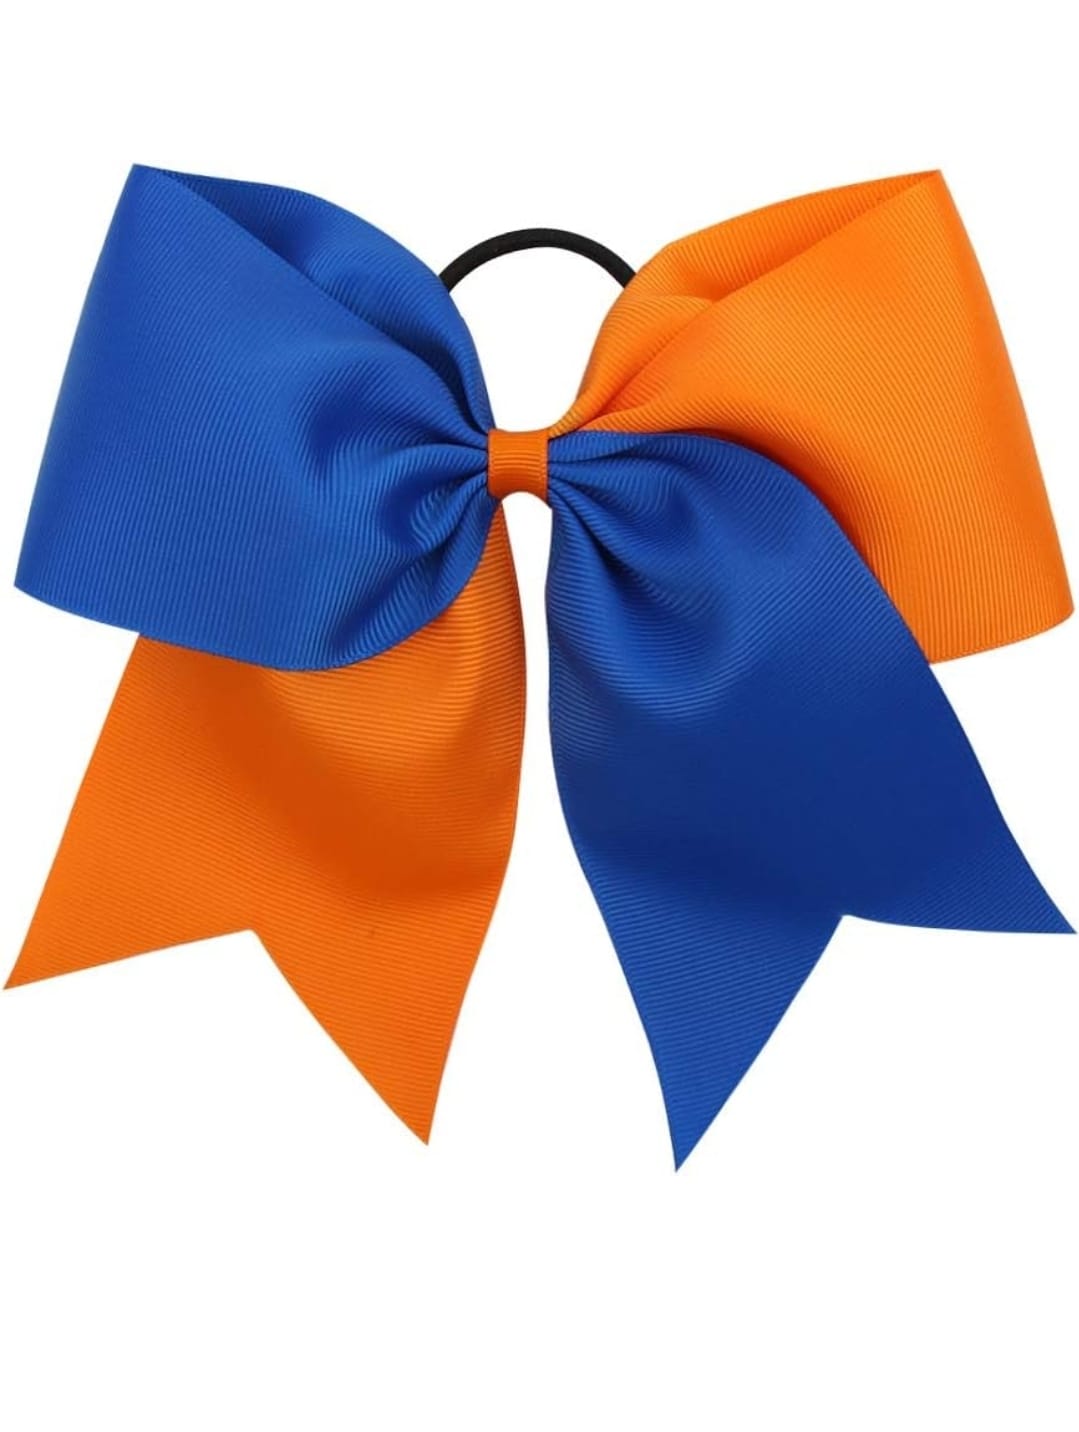 Royal blue and orange Cheer Bow